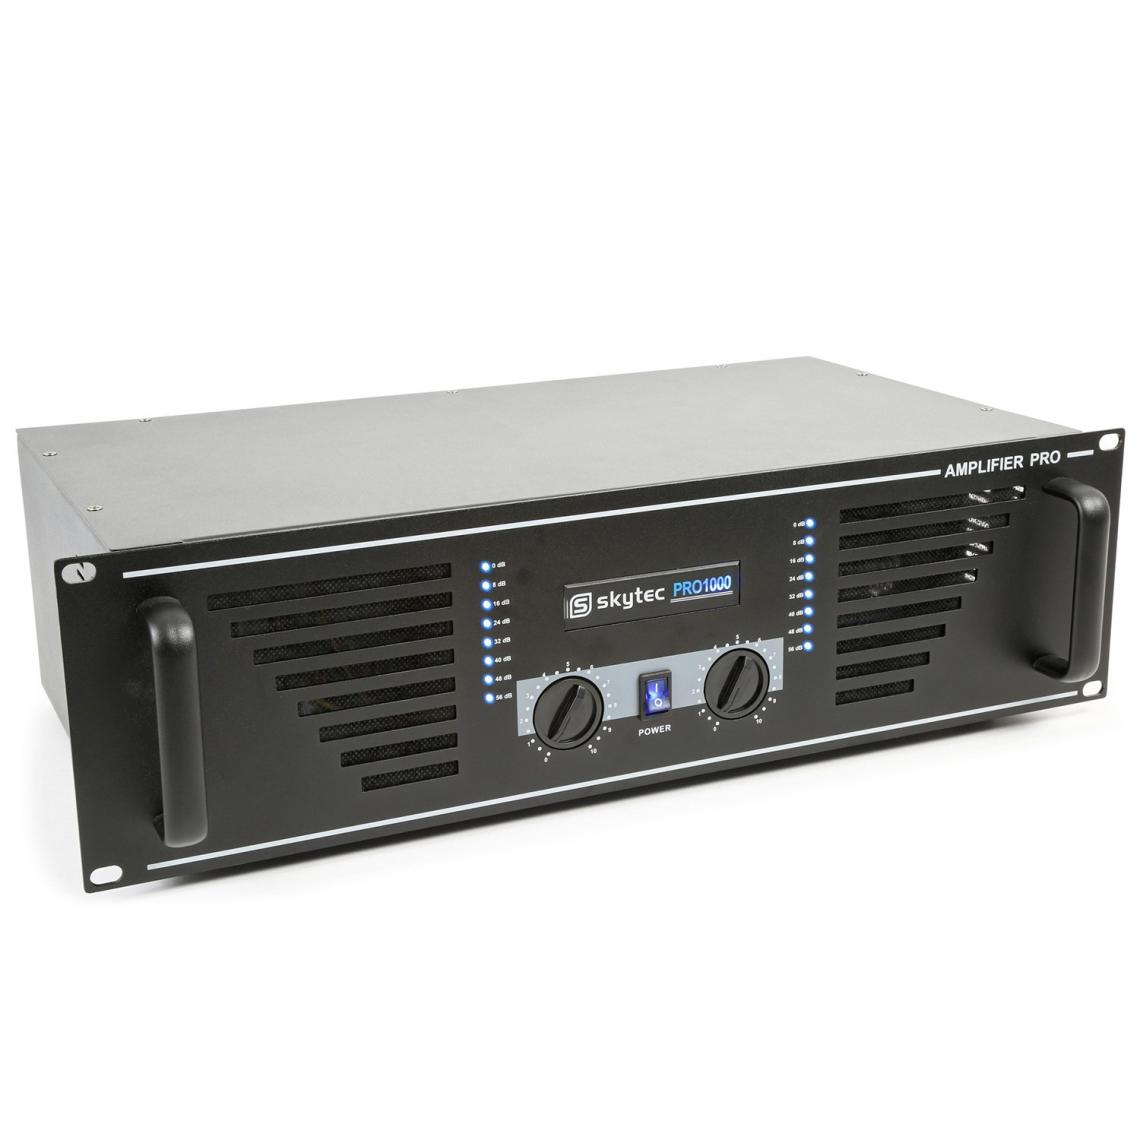 Skytec - Amplificateur sono PRO Skytec SKY-1000B, 2 x 500 Watts, pour Sonorisation DJ - Ampli